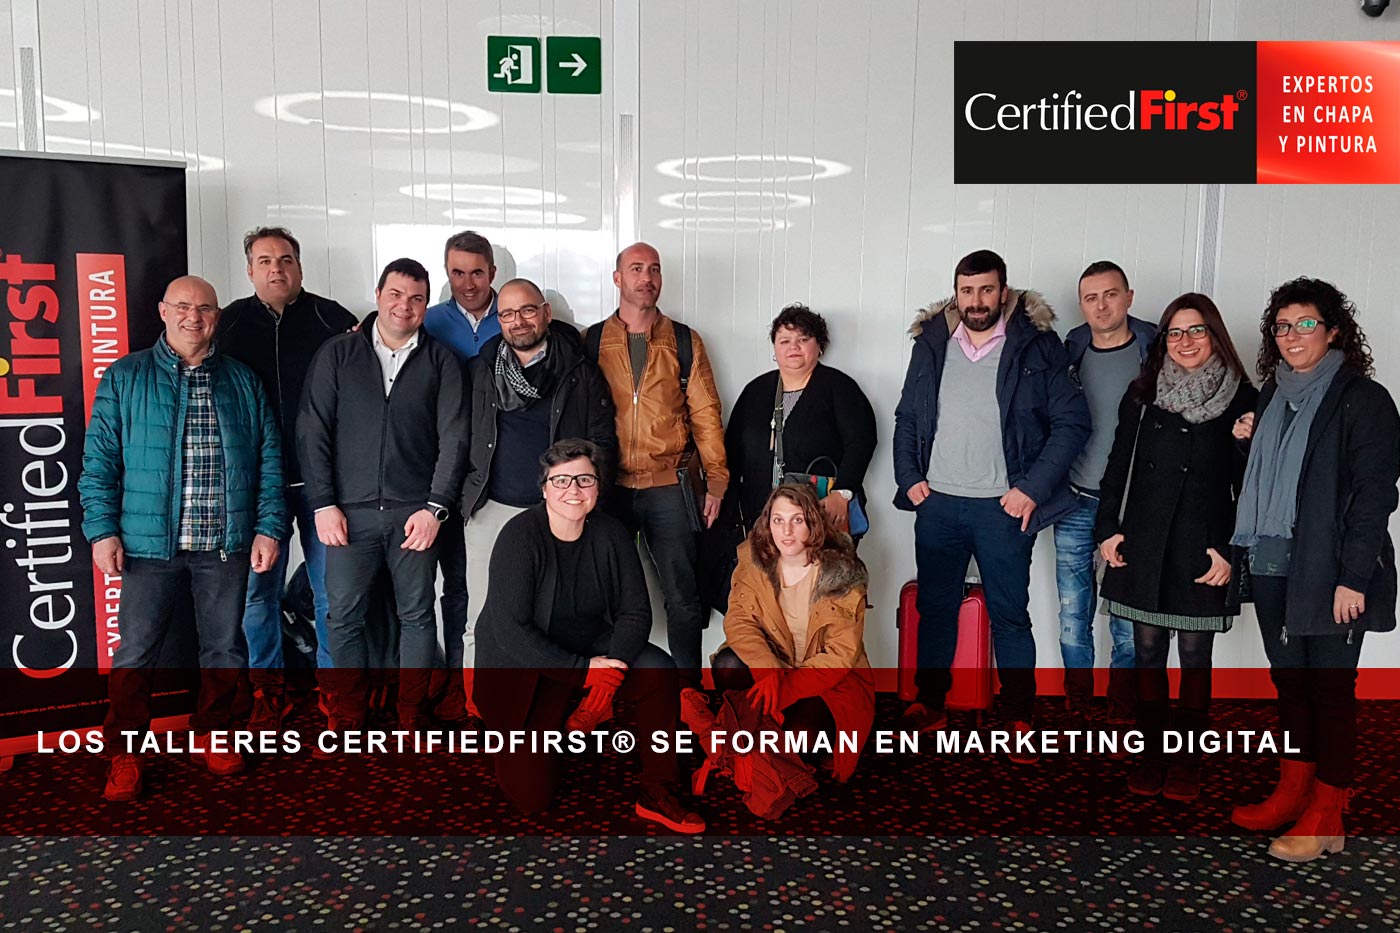 Los talleres CertifiedFirst® se forman en marketing digital